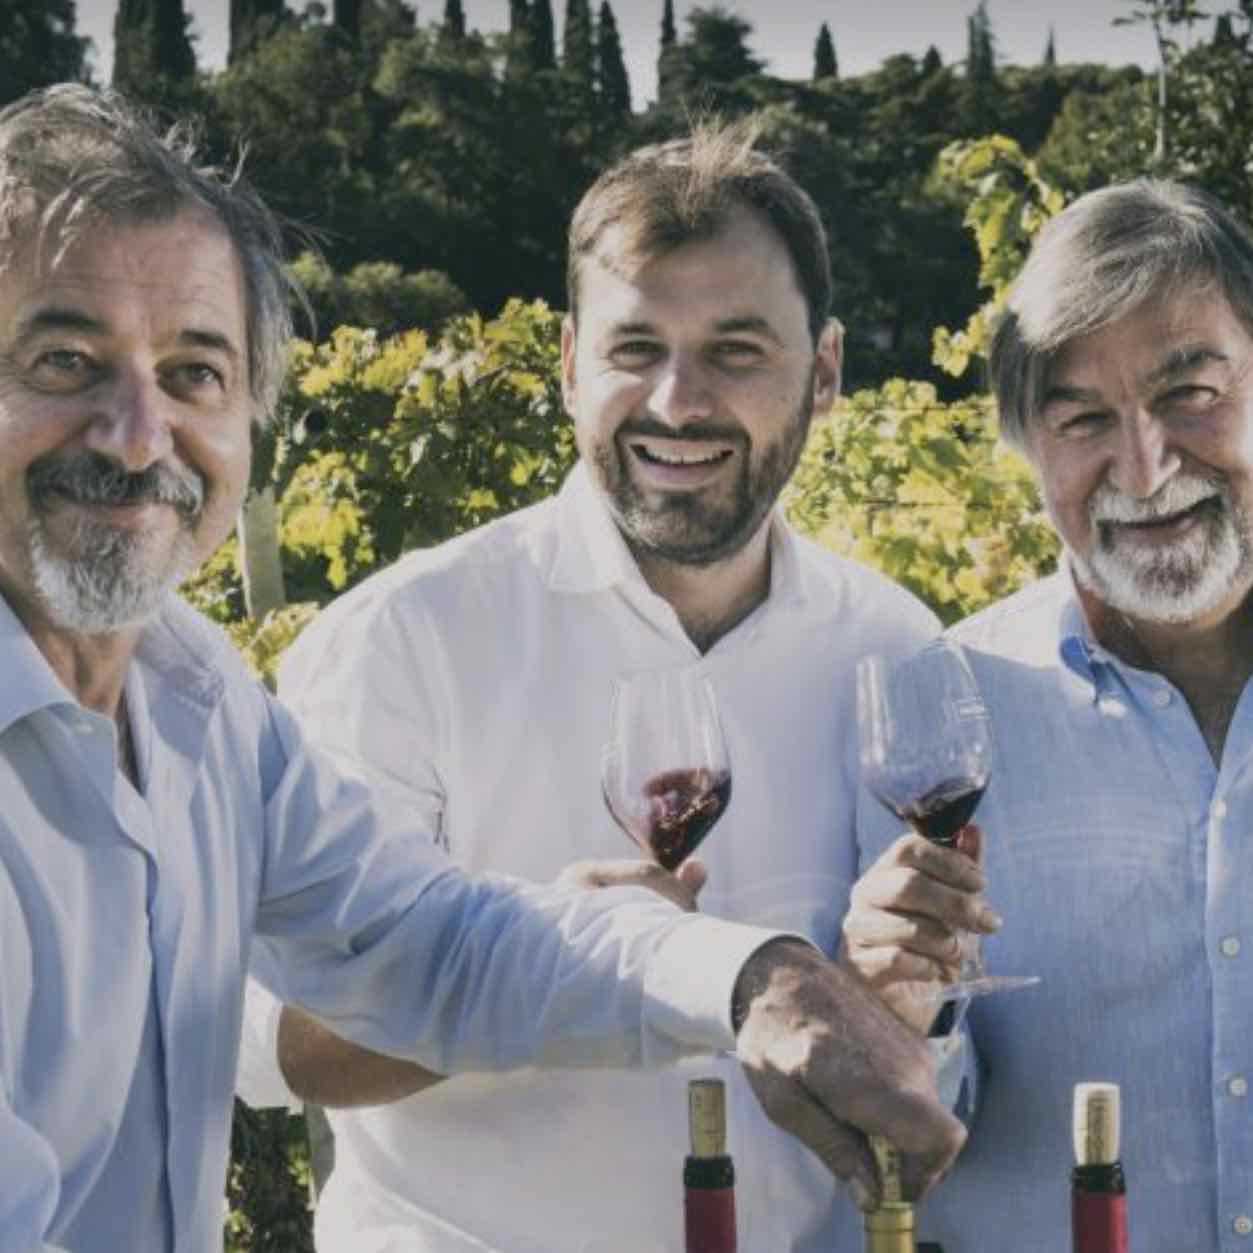 Fasoli Gino azienda vinicola – Gustorotondo – buono sano artigiano – spesa online